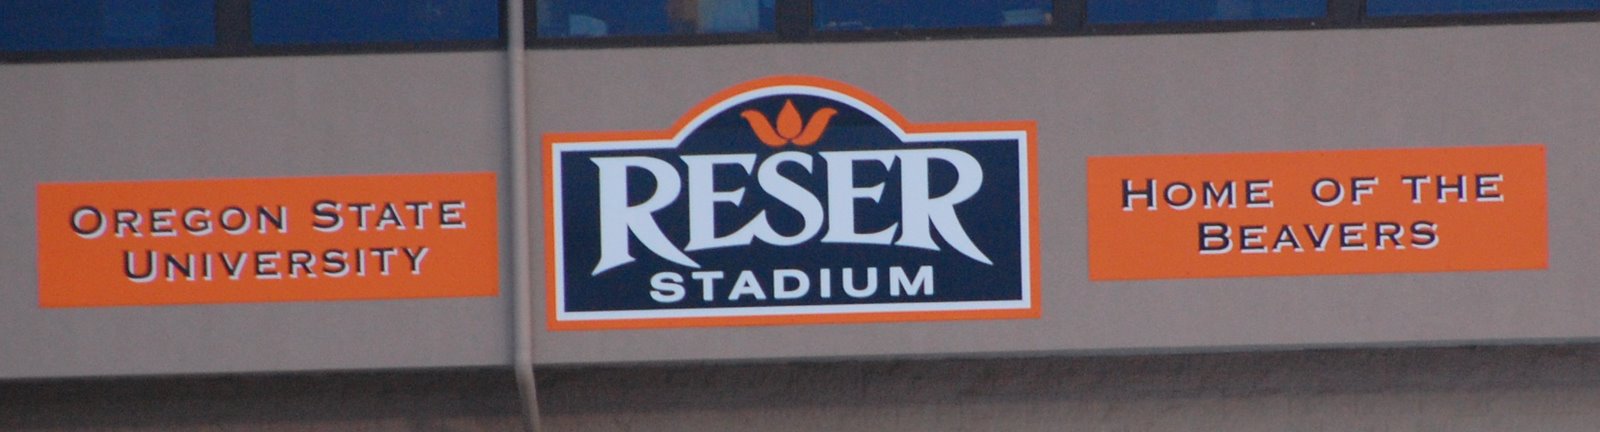 [Reser+Stadium.jpg]